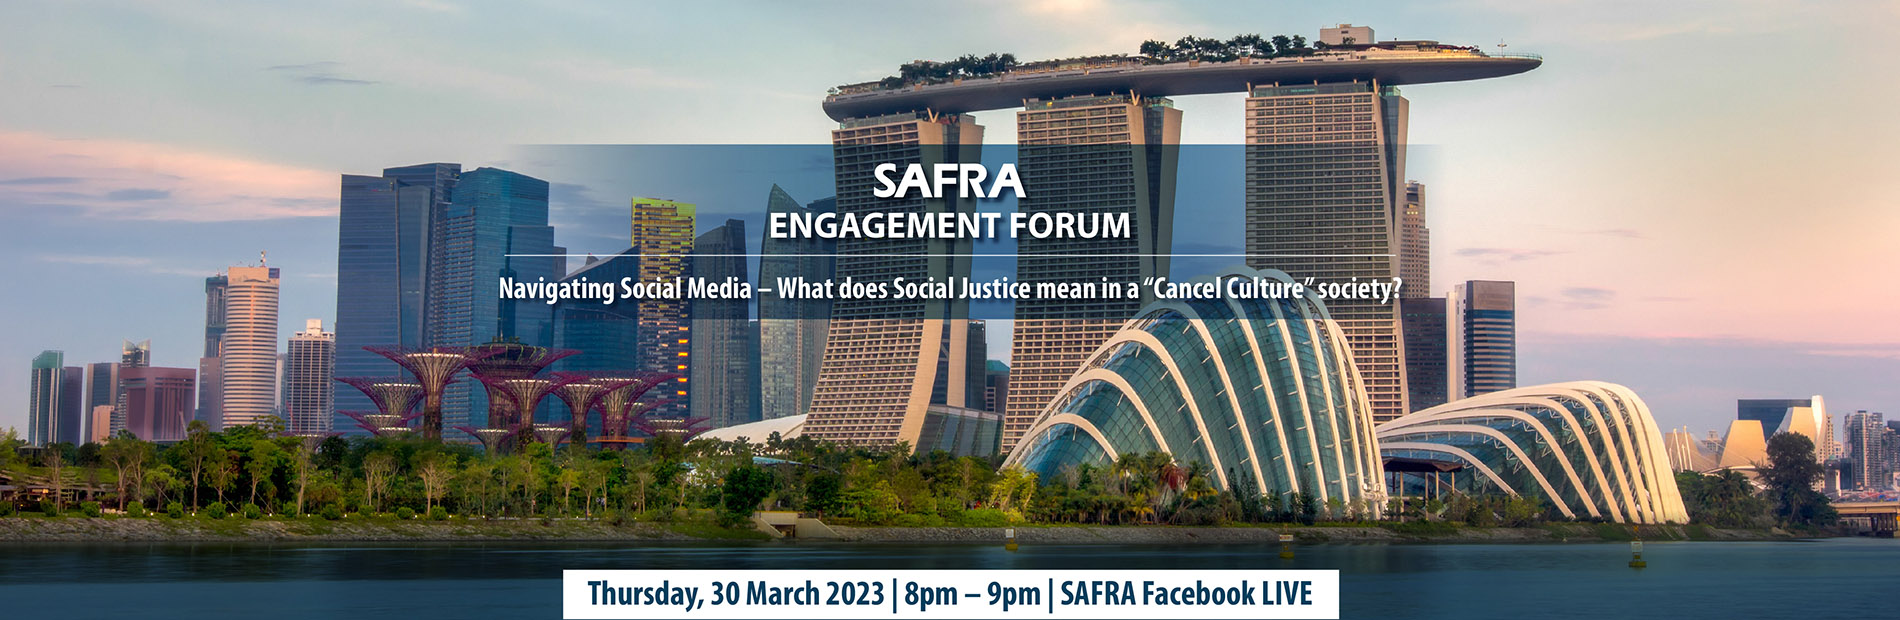 SAFRA Engagement Forum 30 March Facebook LIVE 8pm - 9pm